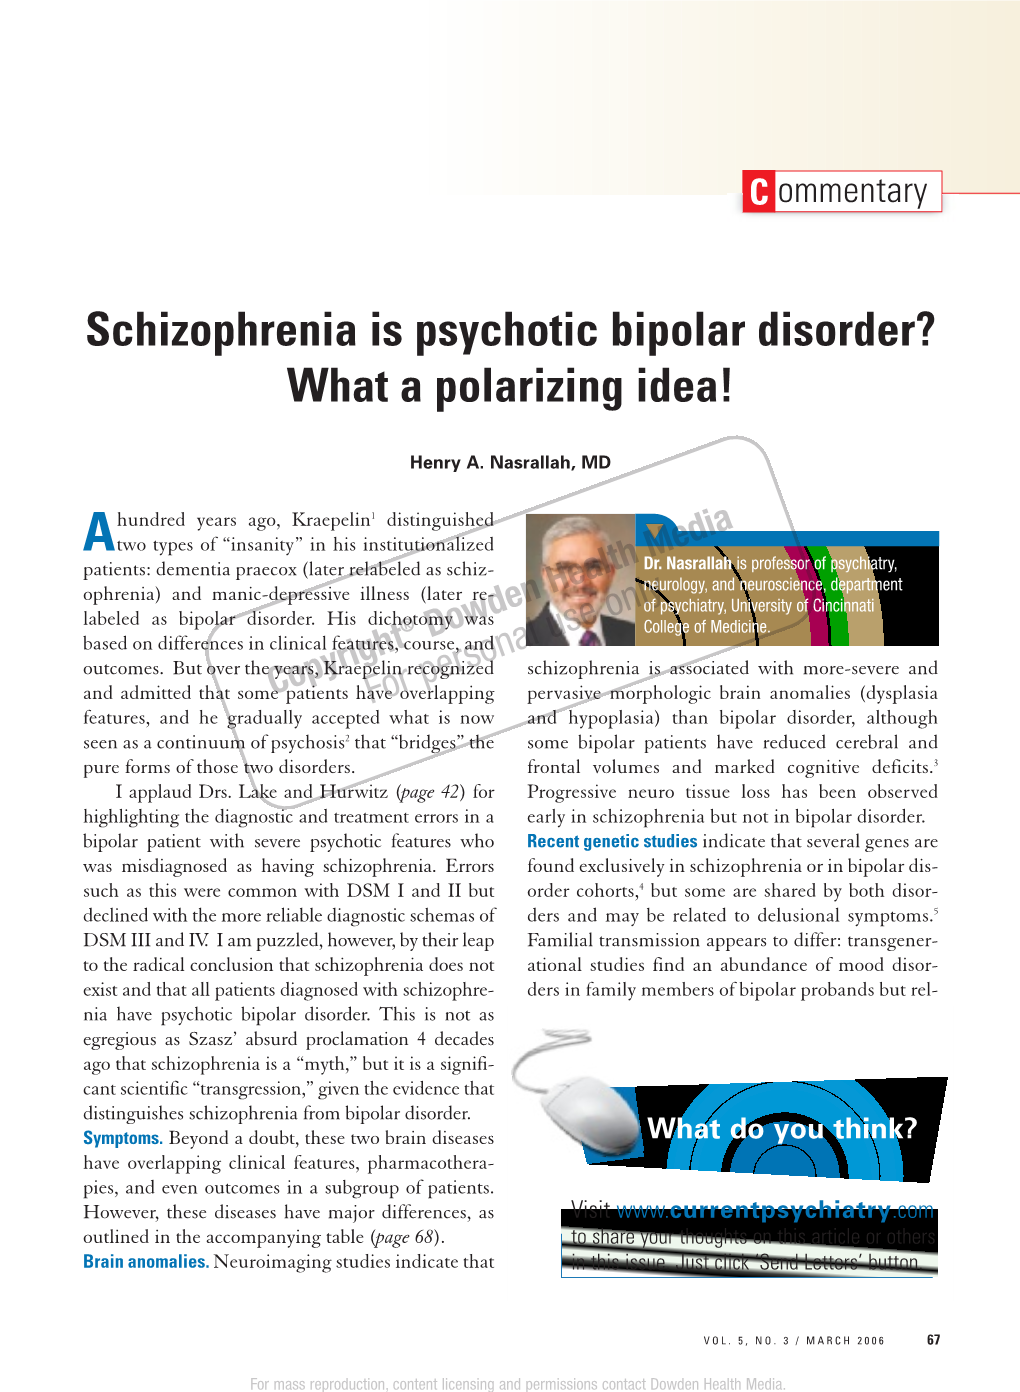 Schizophrenia Is Psychotic Bipolar Disorder? What a Polarizing Idea!